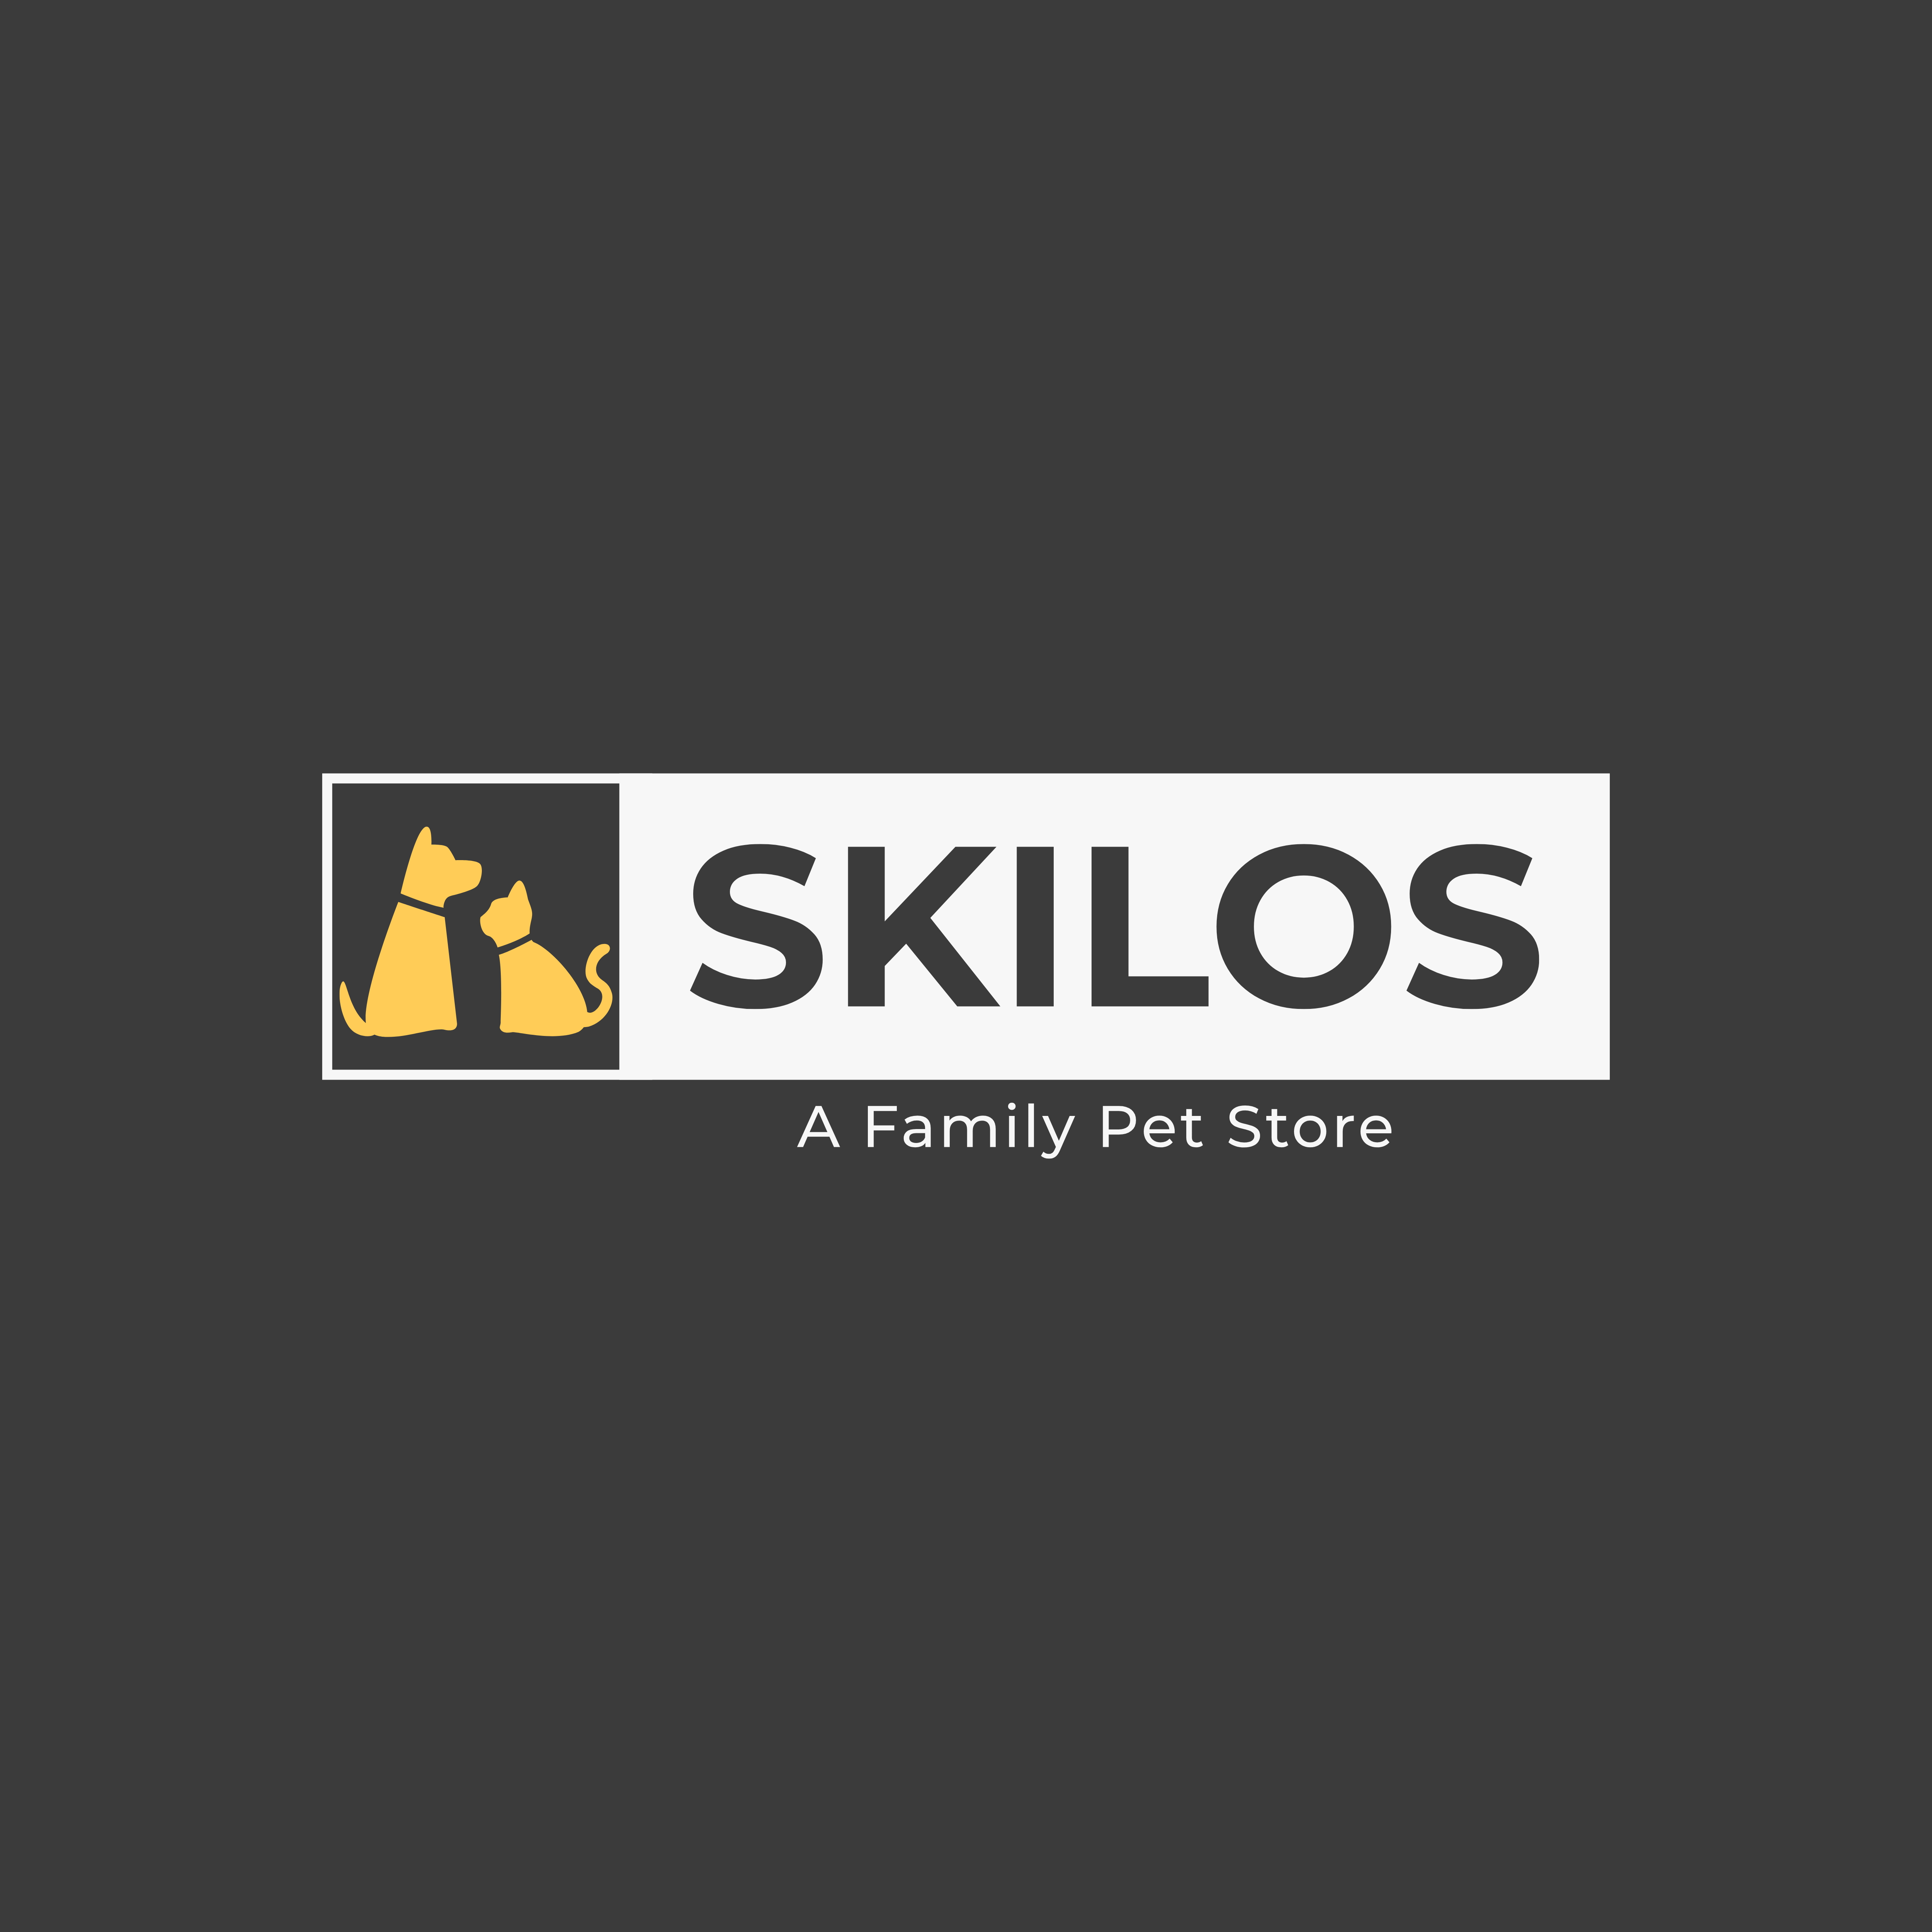 Skilos -新宠物店- 2021年4月15日在下东区开业